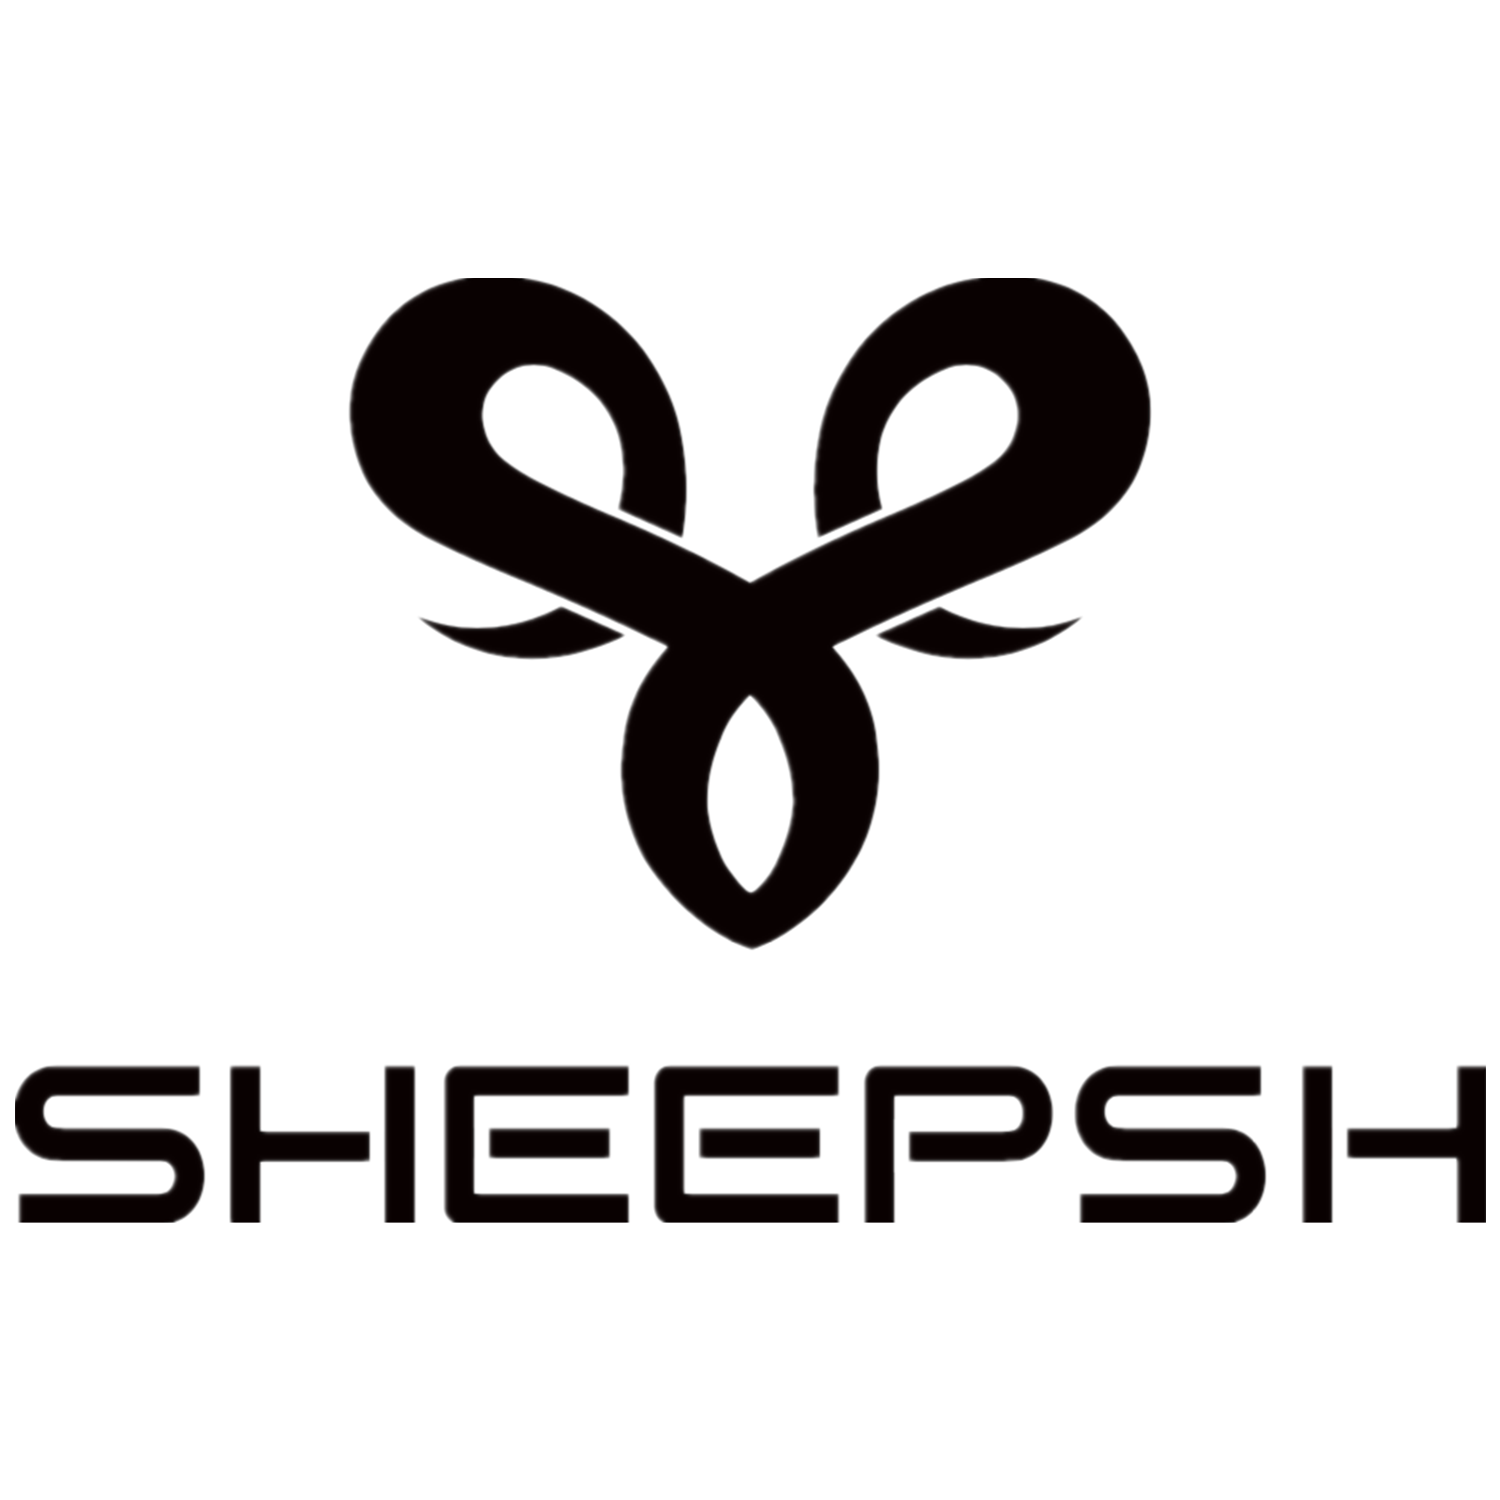 SHEEPSH